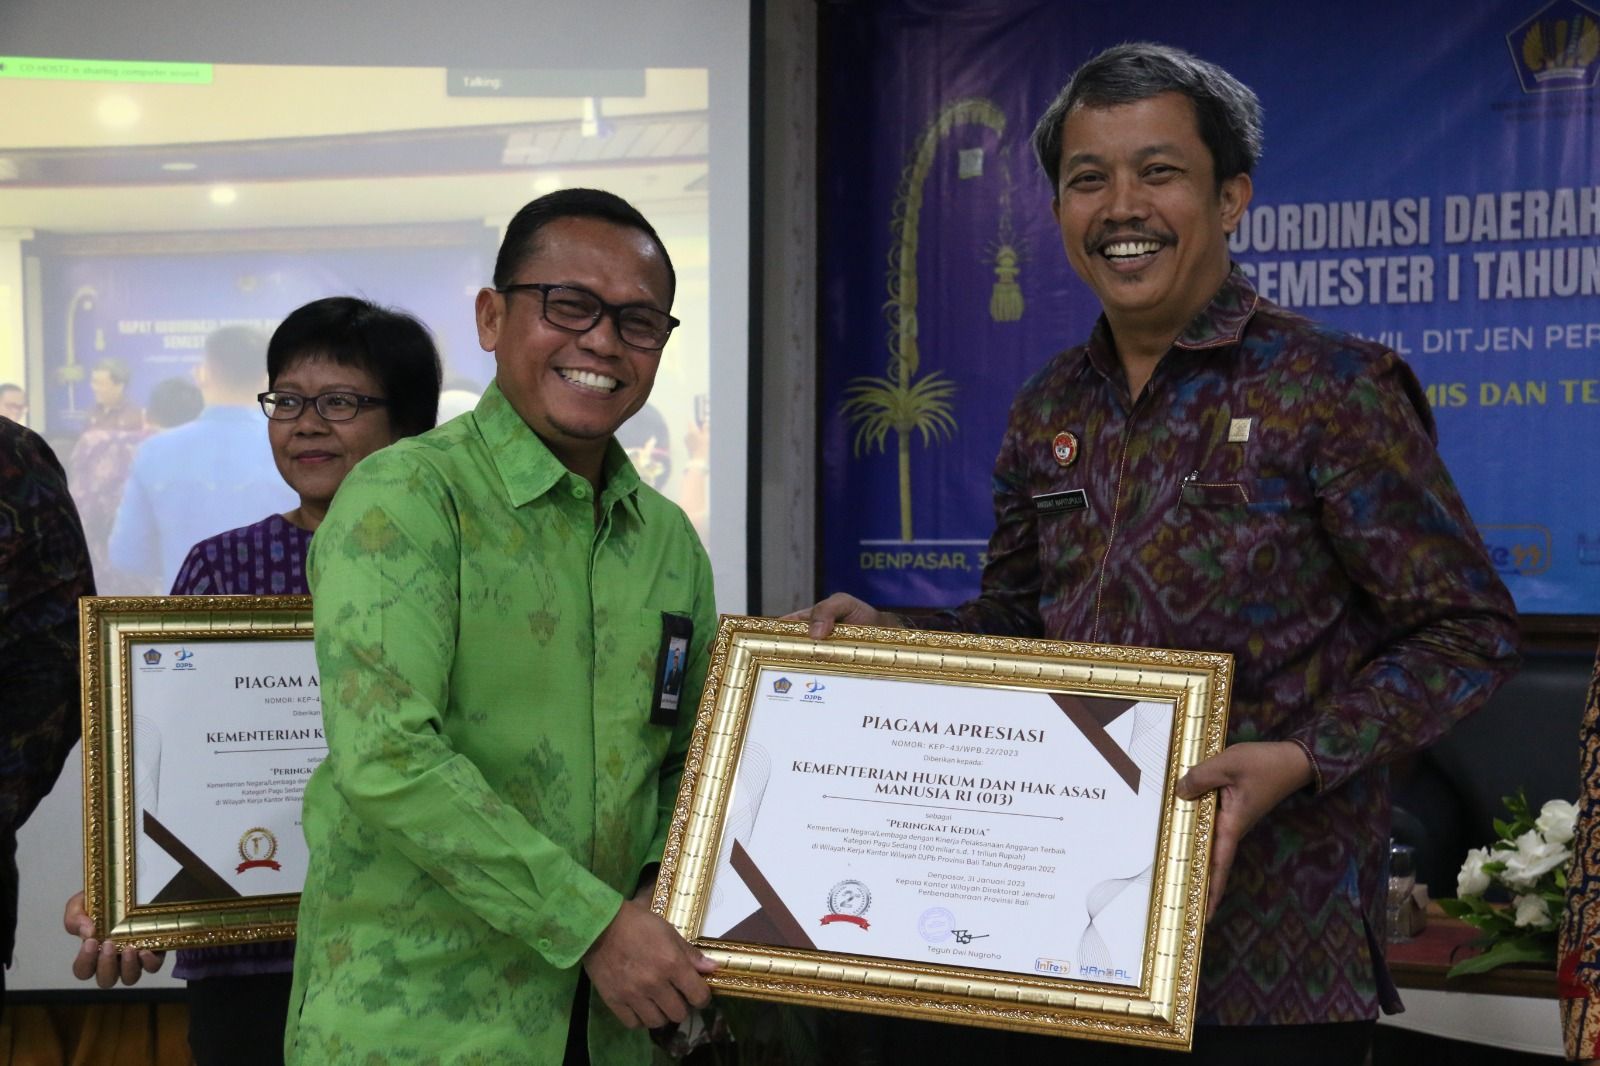 Kepala Kanwil Kemenkumham Bali saat menerima penghargaan dari Kanwil Dirjen Perbendaharaan Bali Selasa 31 Januari 2023.